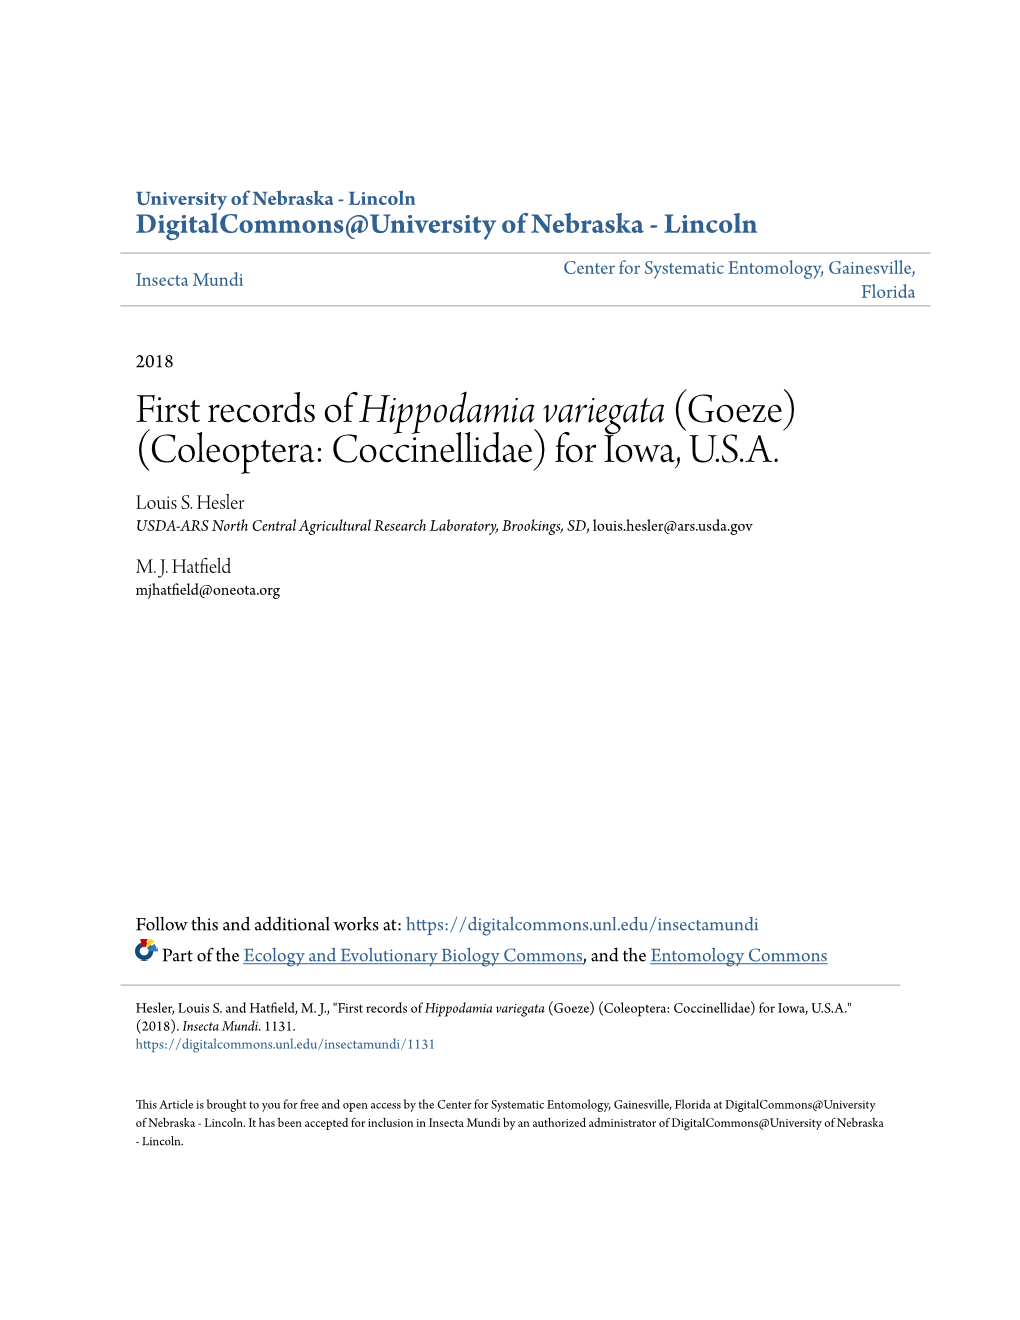 First Records of &lt;I&gt;Hippodamia Variegata&lt;/I&gt; (Goeze) (Coleoptera: Coccinellidae) for Iowa, U.S.A